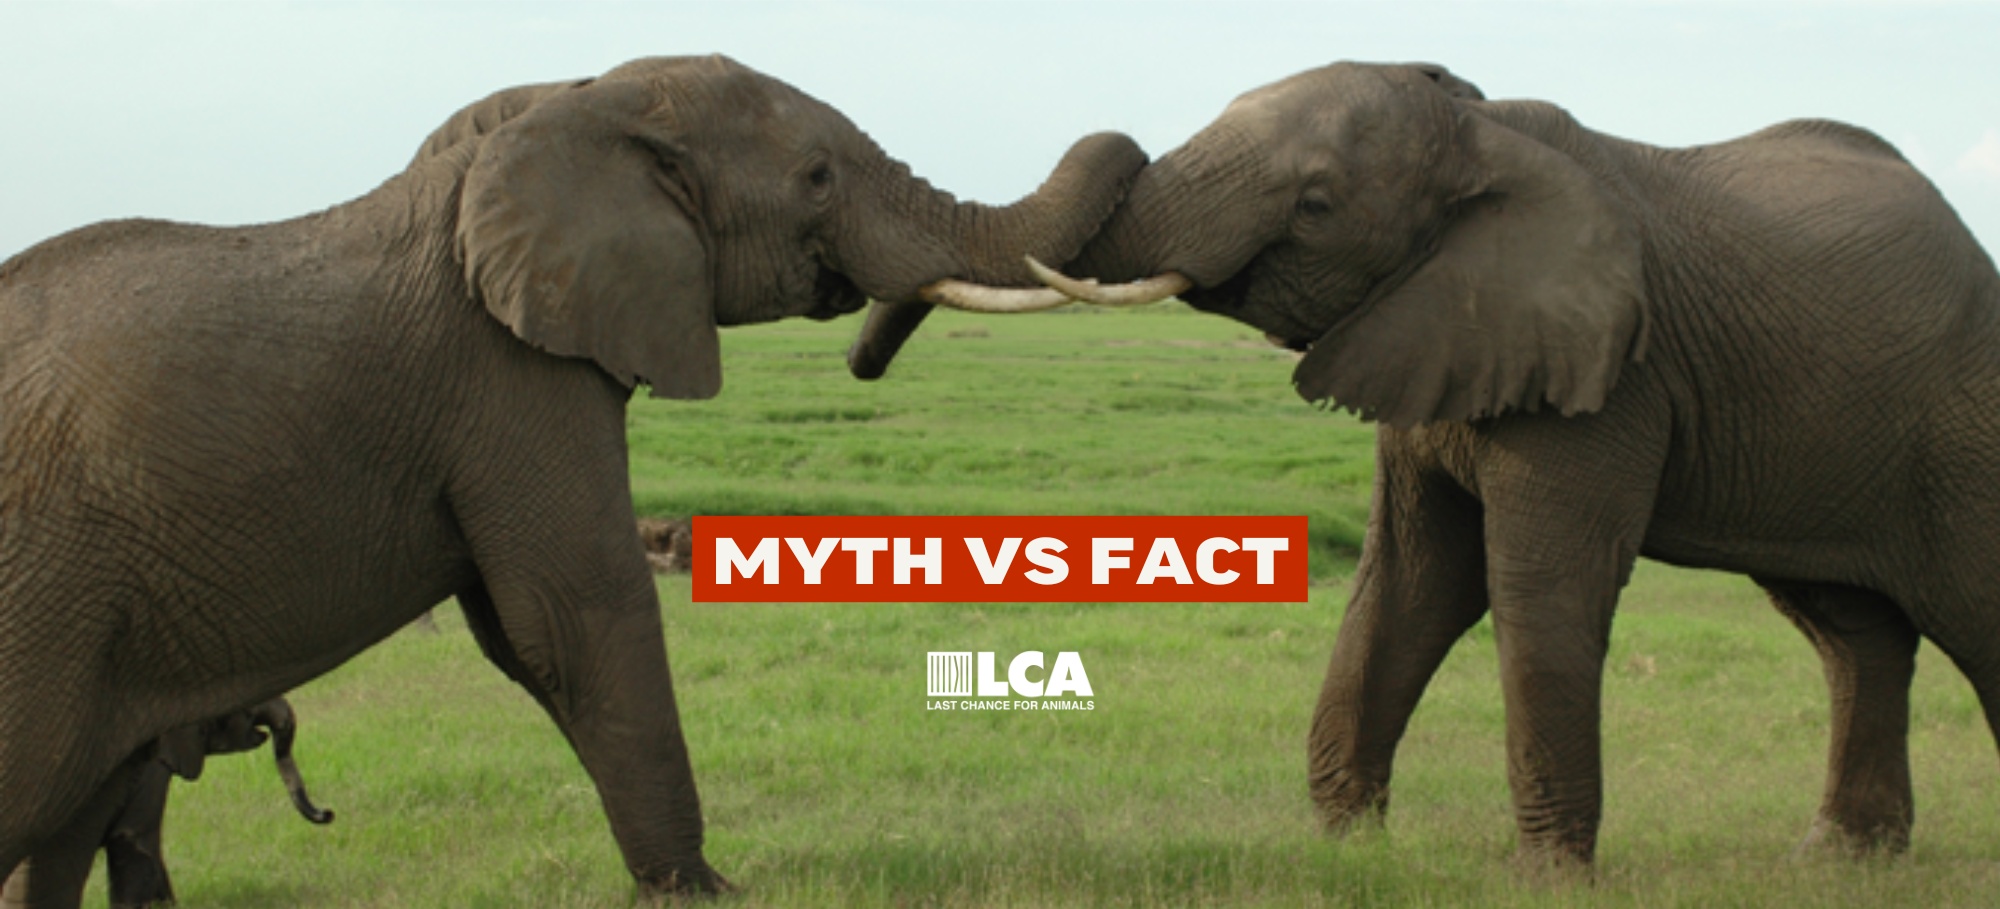 elephant myth vs fact